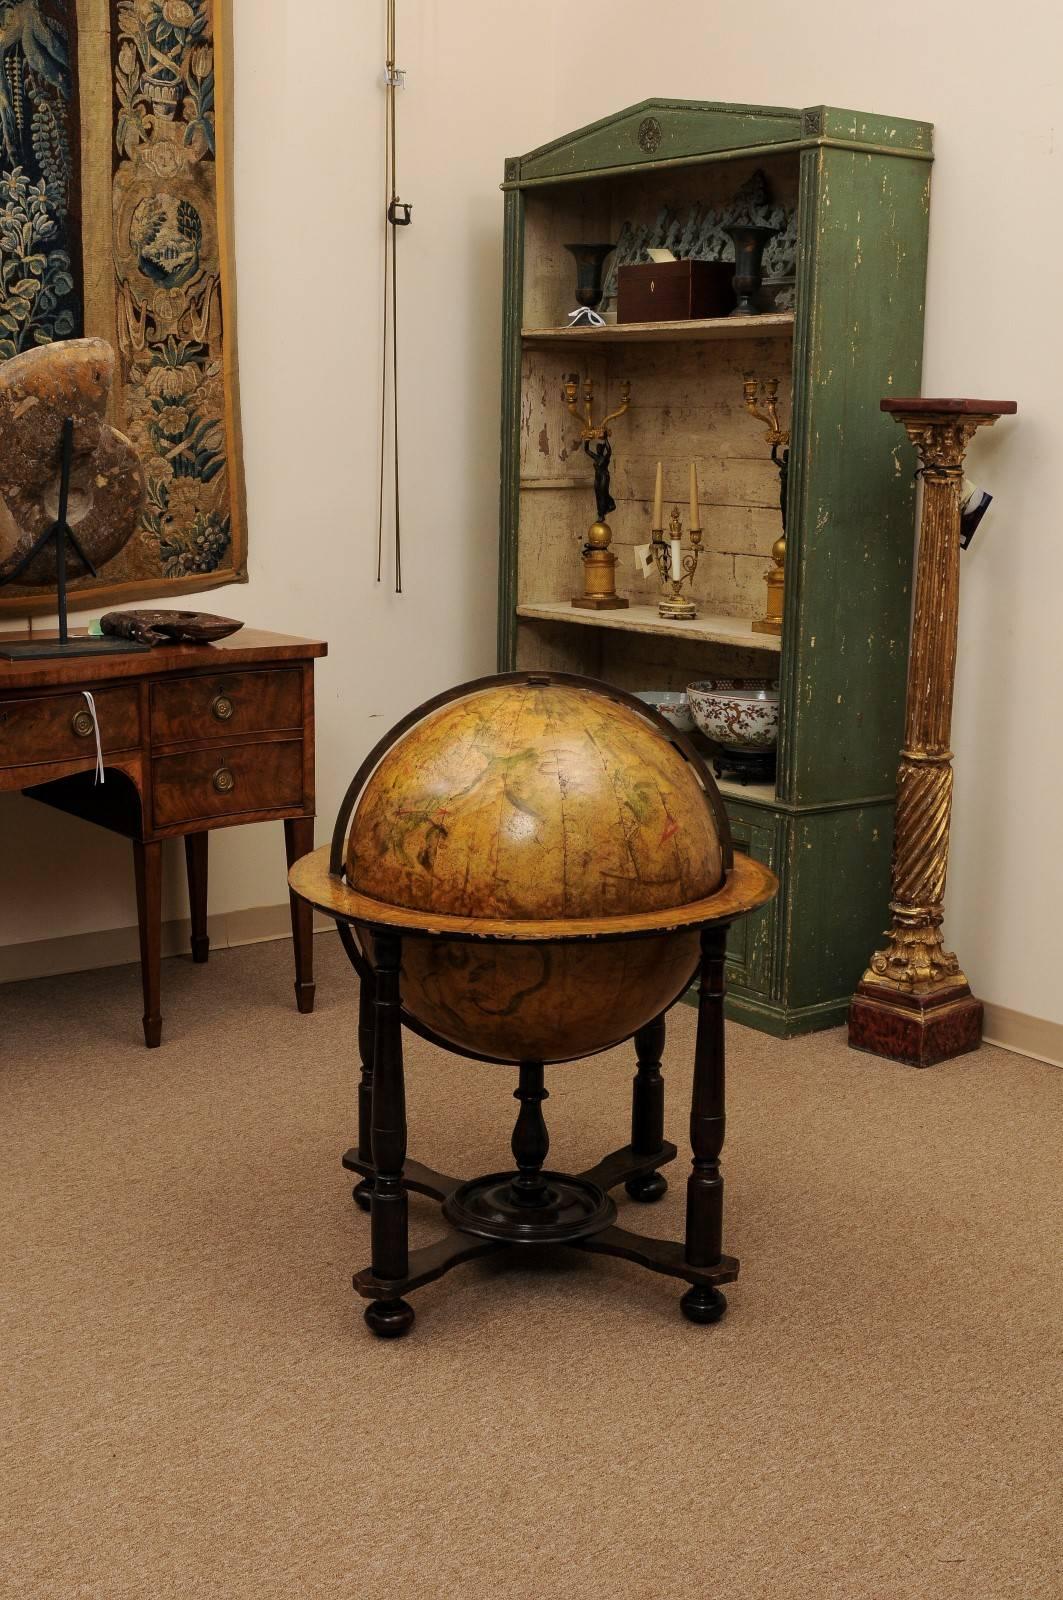 17th century globe